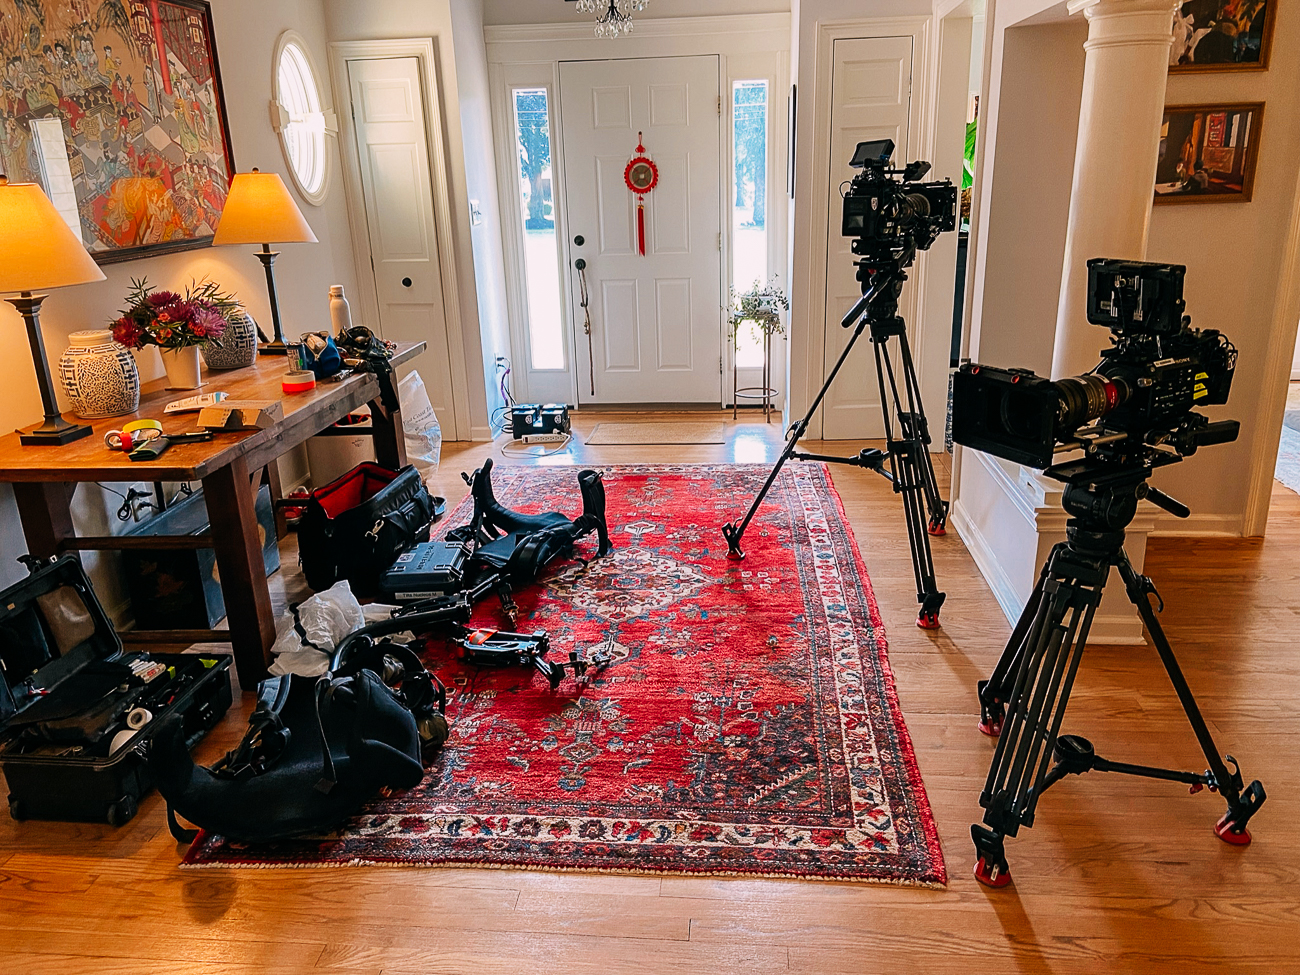 Filming equipment in foyer